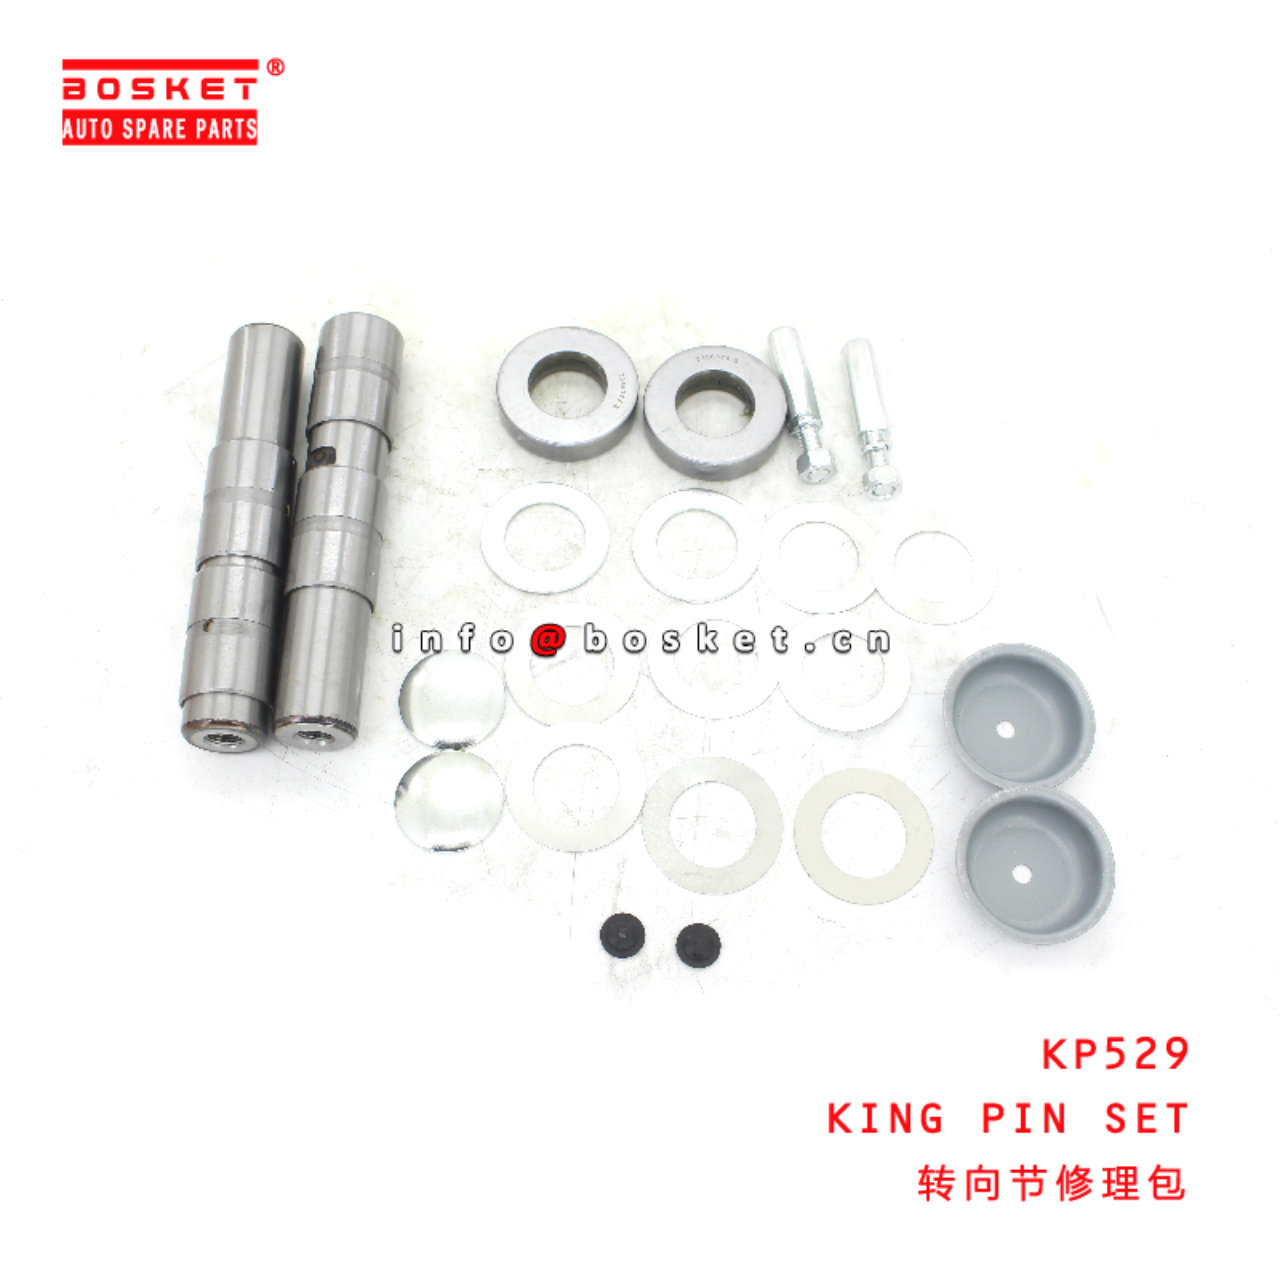 KP529 King Pin Set suitable for ISUZU   KP529